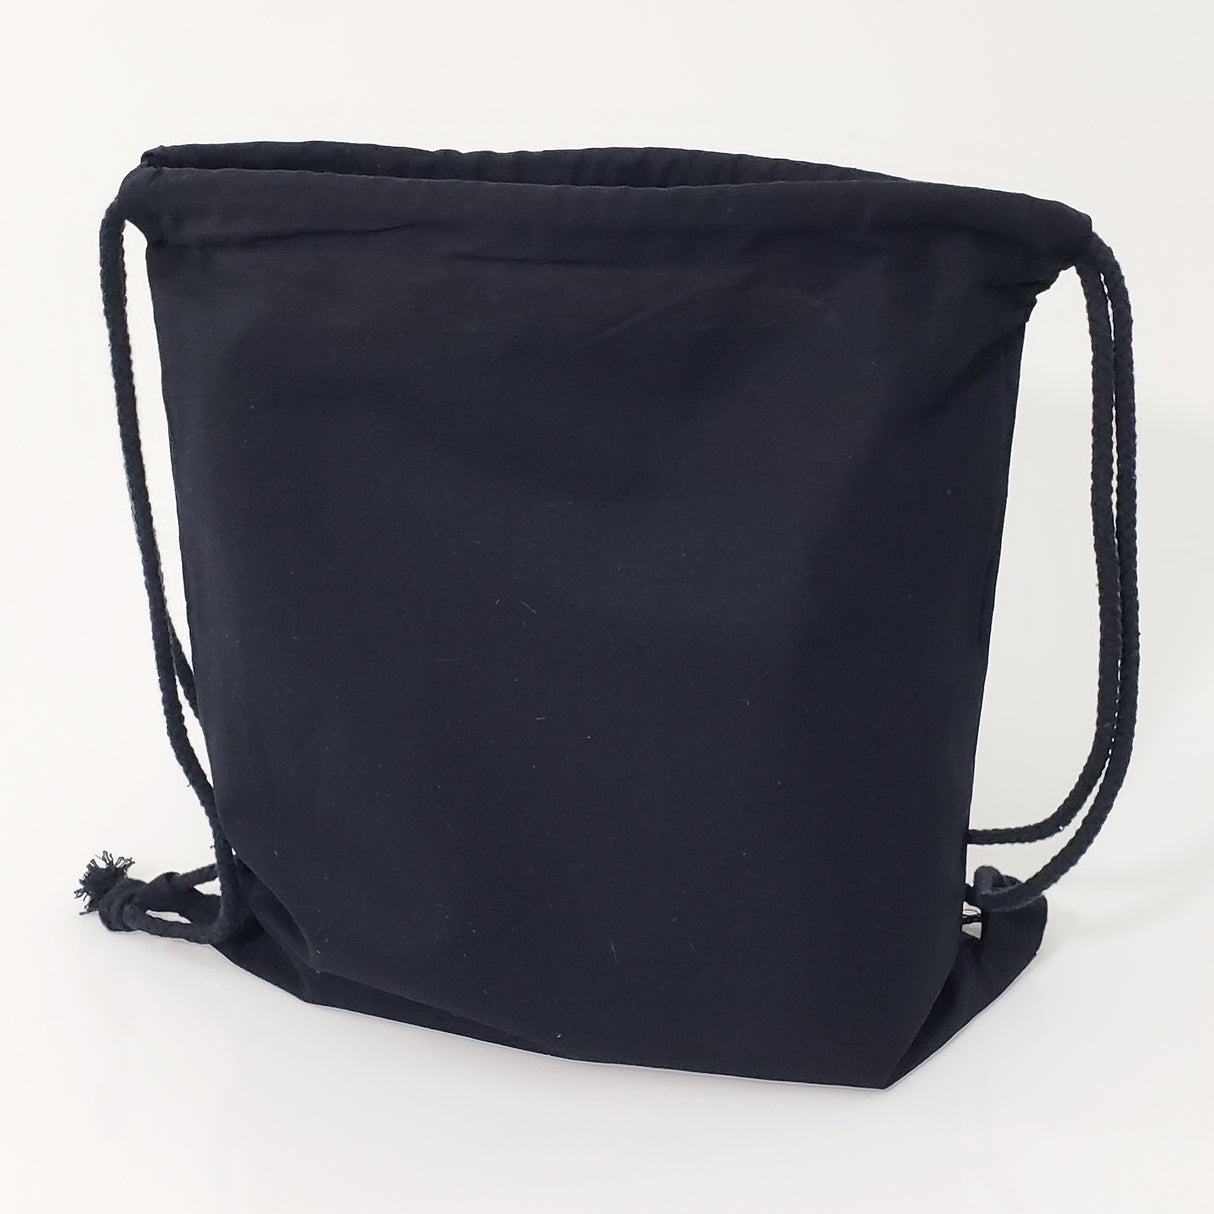 durable-black-sport-cinch-bags